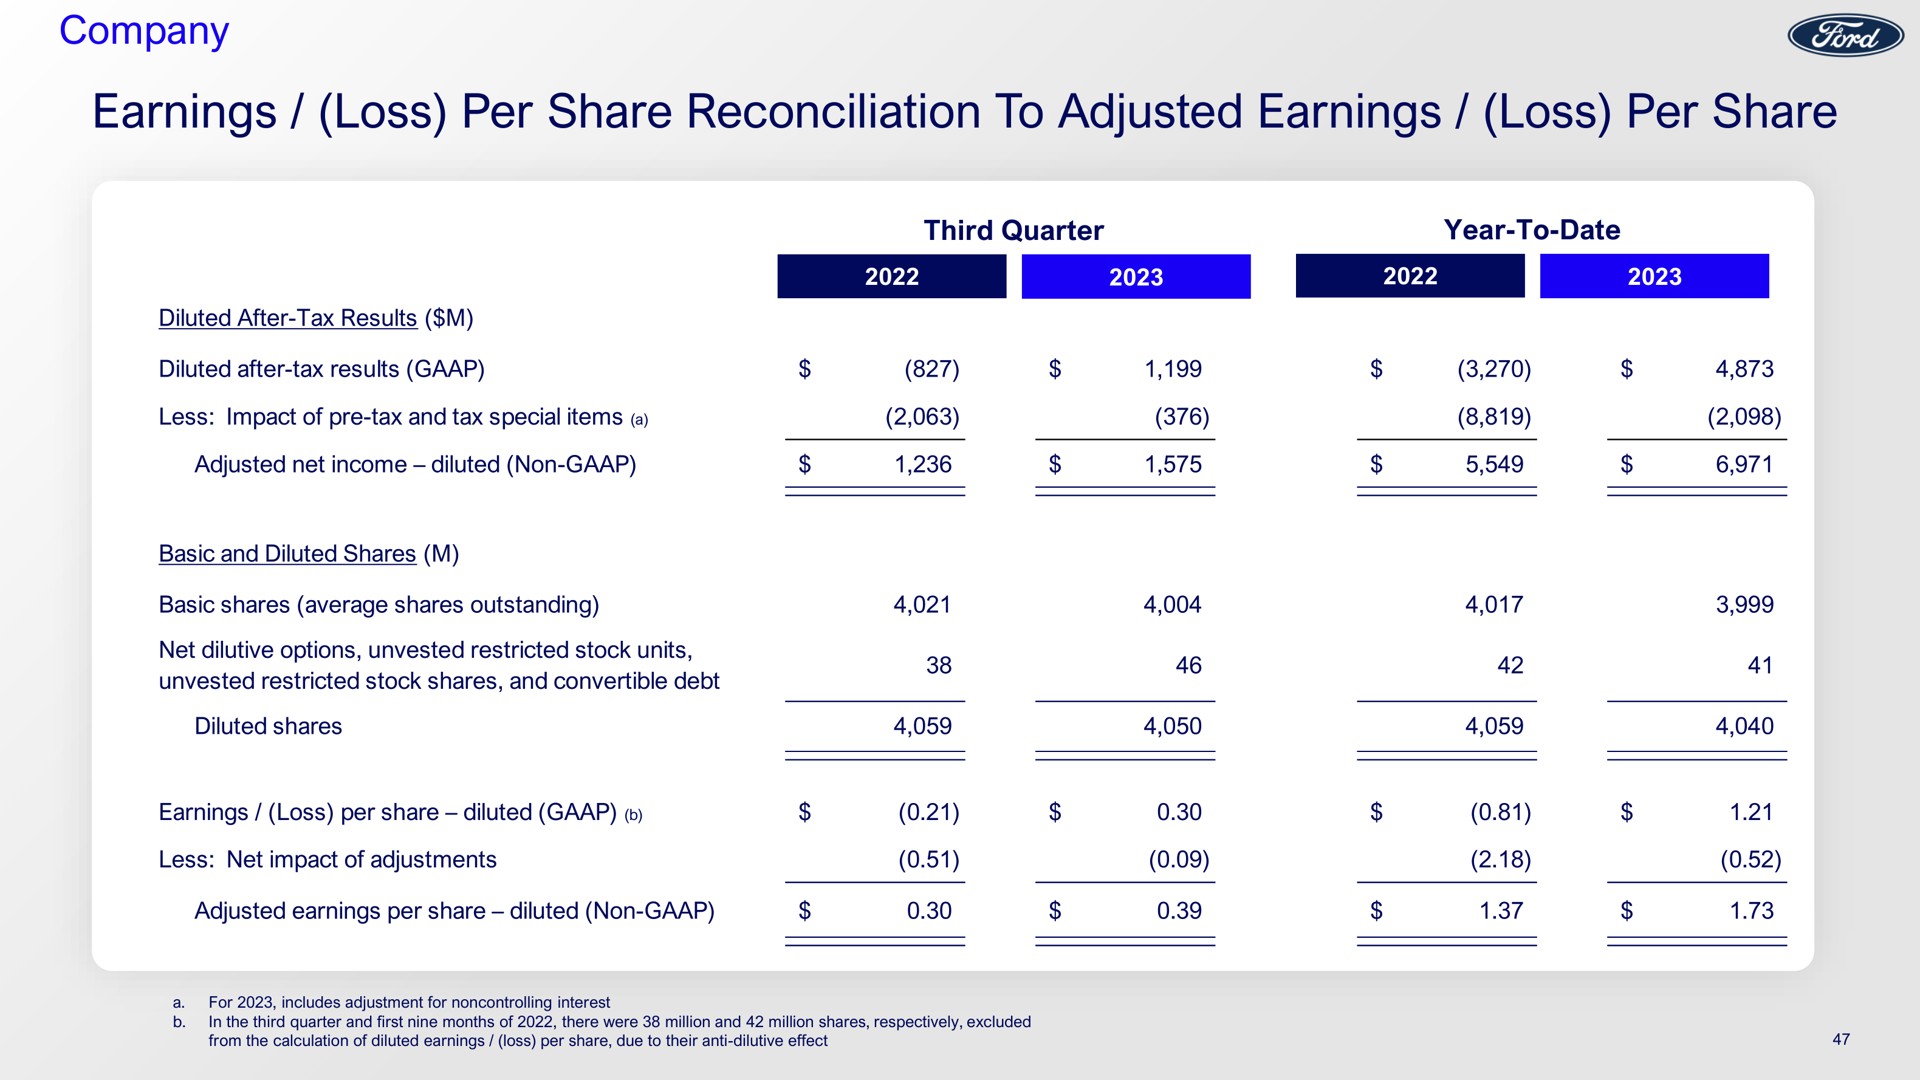 company earnings loss per share reconciliation to adjusted earnings loss per share | Ford